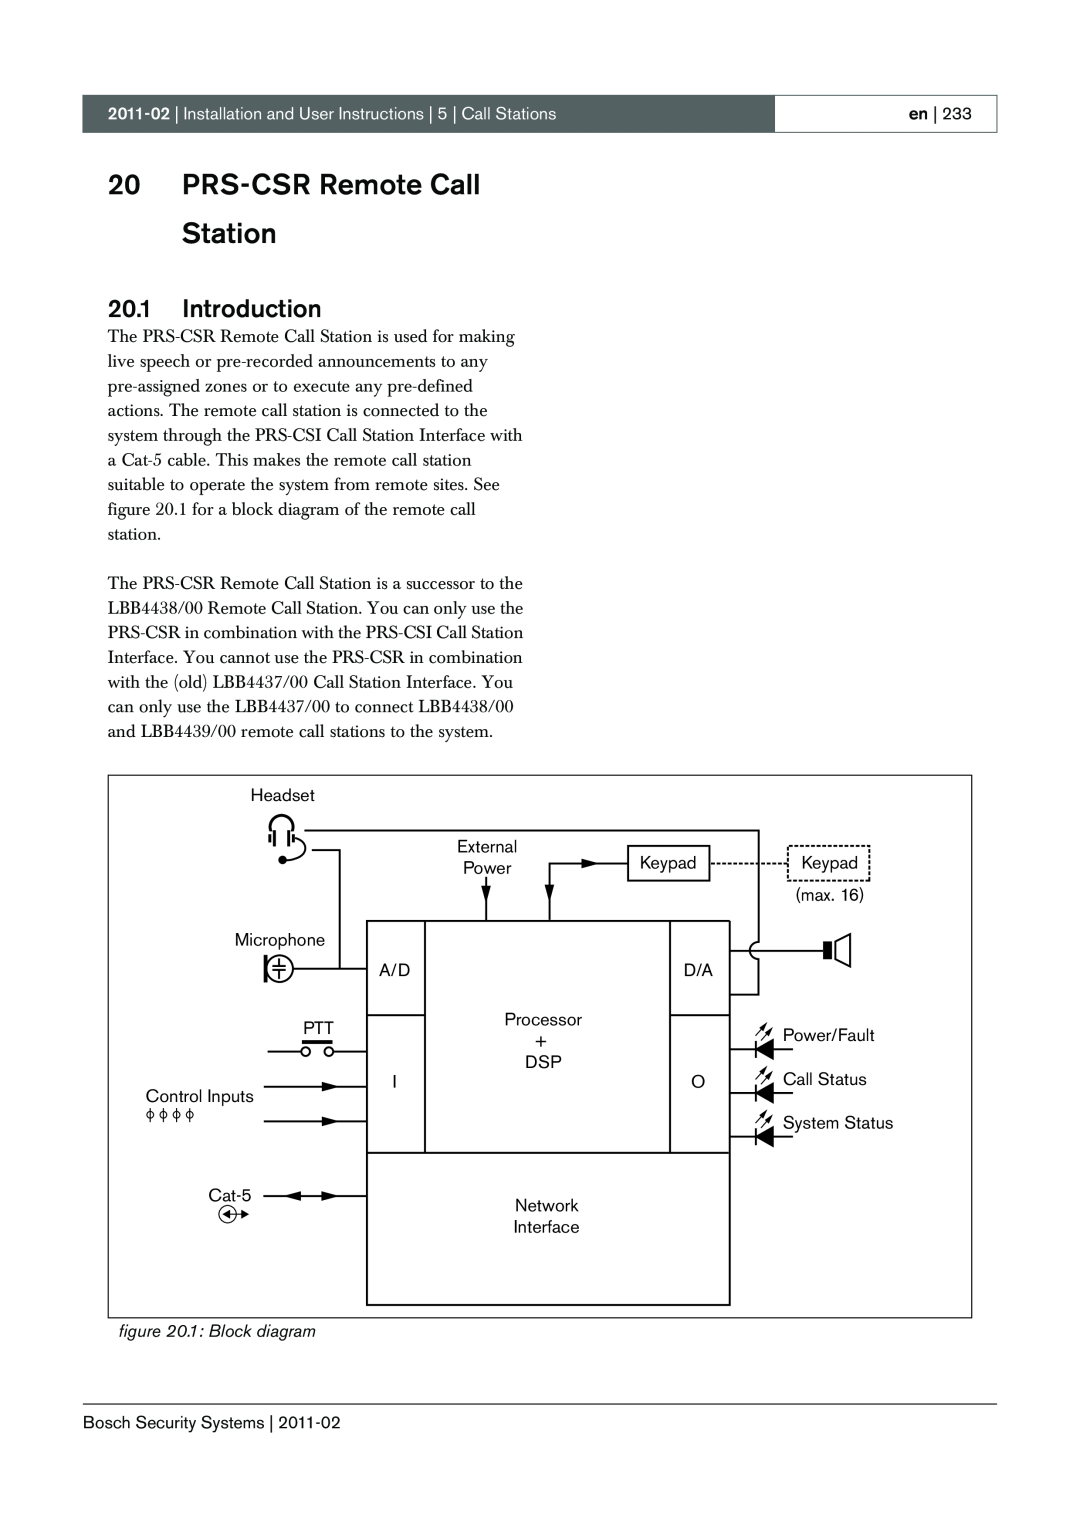 Bosch Appliances 3.5 manual 20PRS-CSRRemote Call Station, 20.1Introduction, 1: Block diagram 